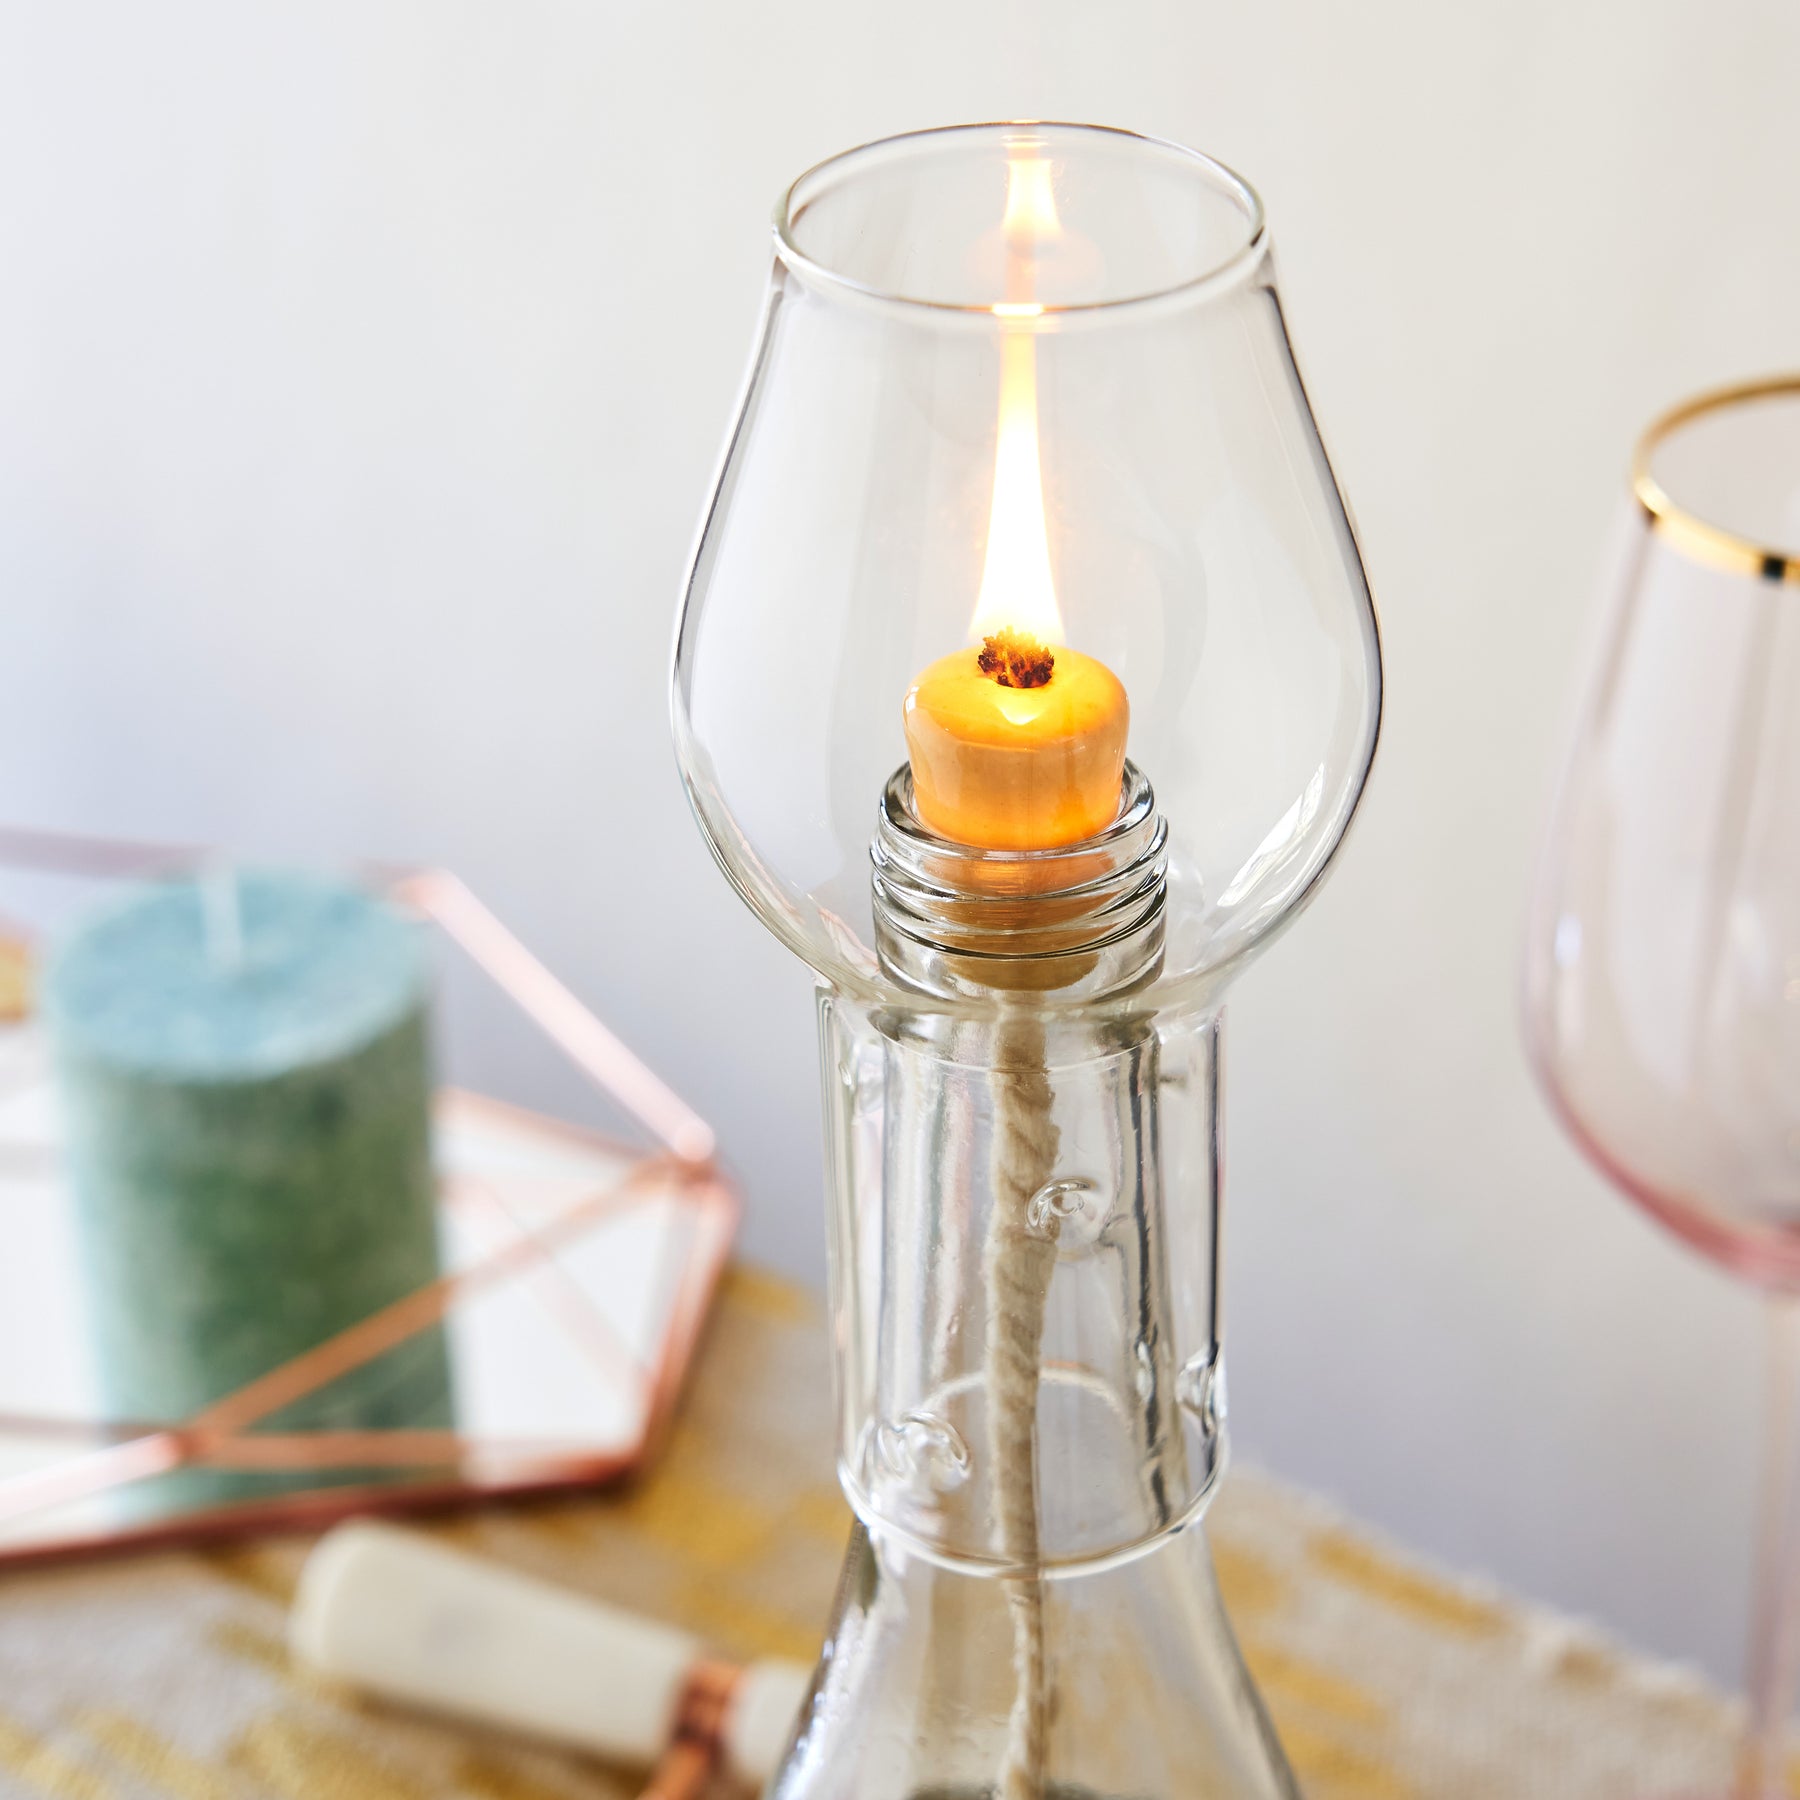 Aspen Creative 21018, Make-A-Wine Bottle Lamp Kit in Polished Brass, 2 Pack